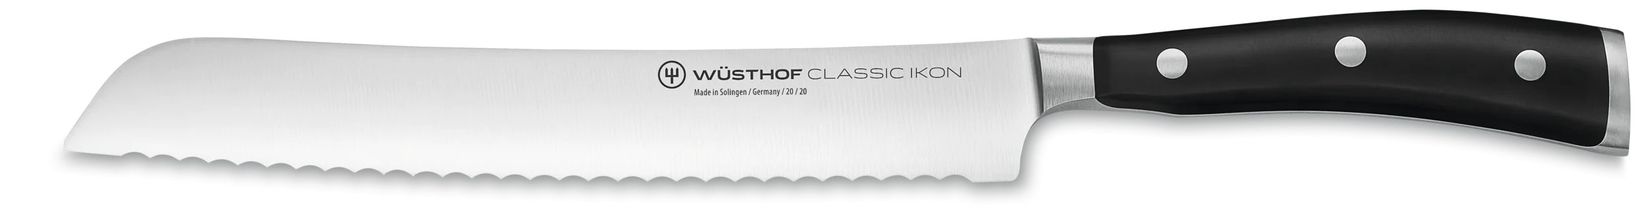 Wusthof Bread Knife Classic Ikon 20 cm